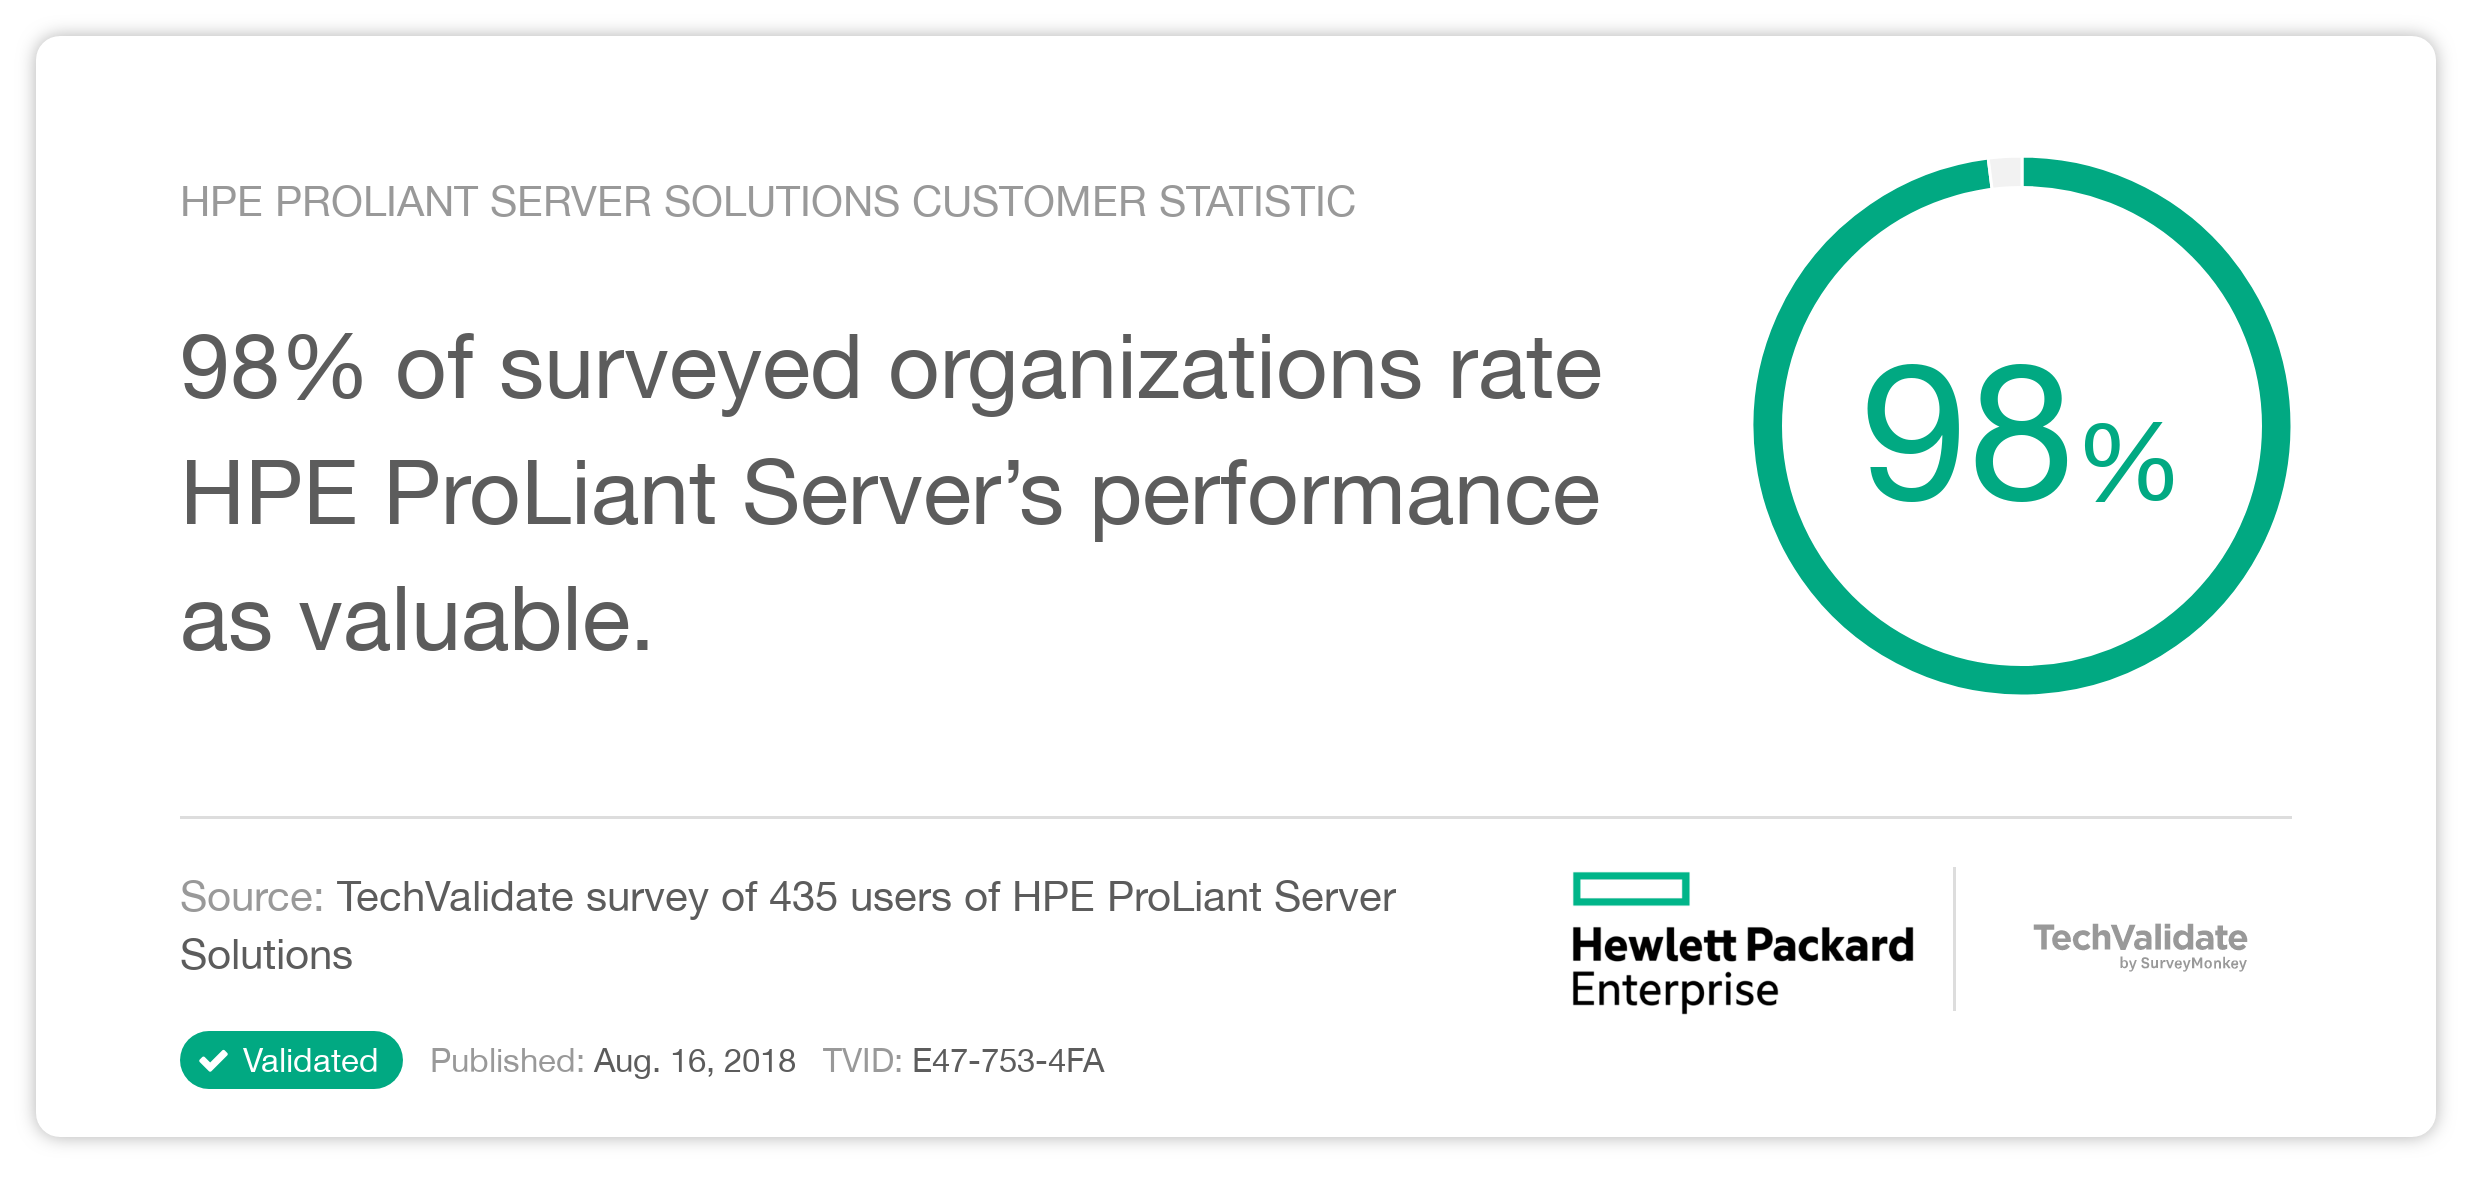 HPE ProLiant Server Solutions Customer Statistic